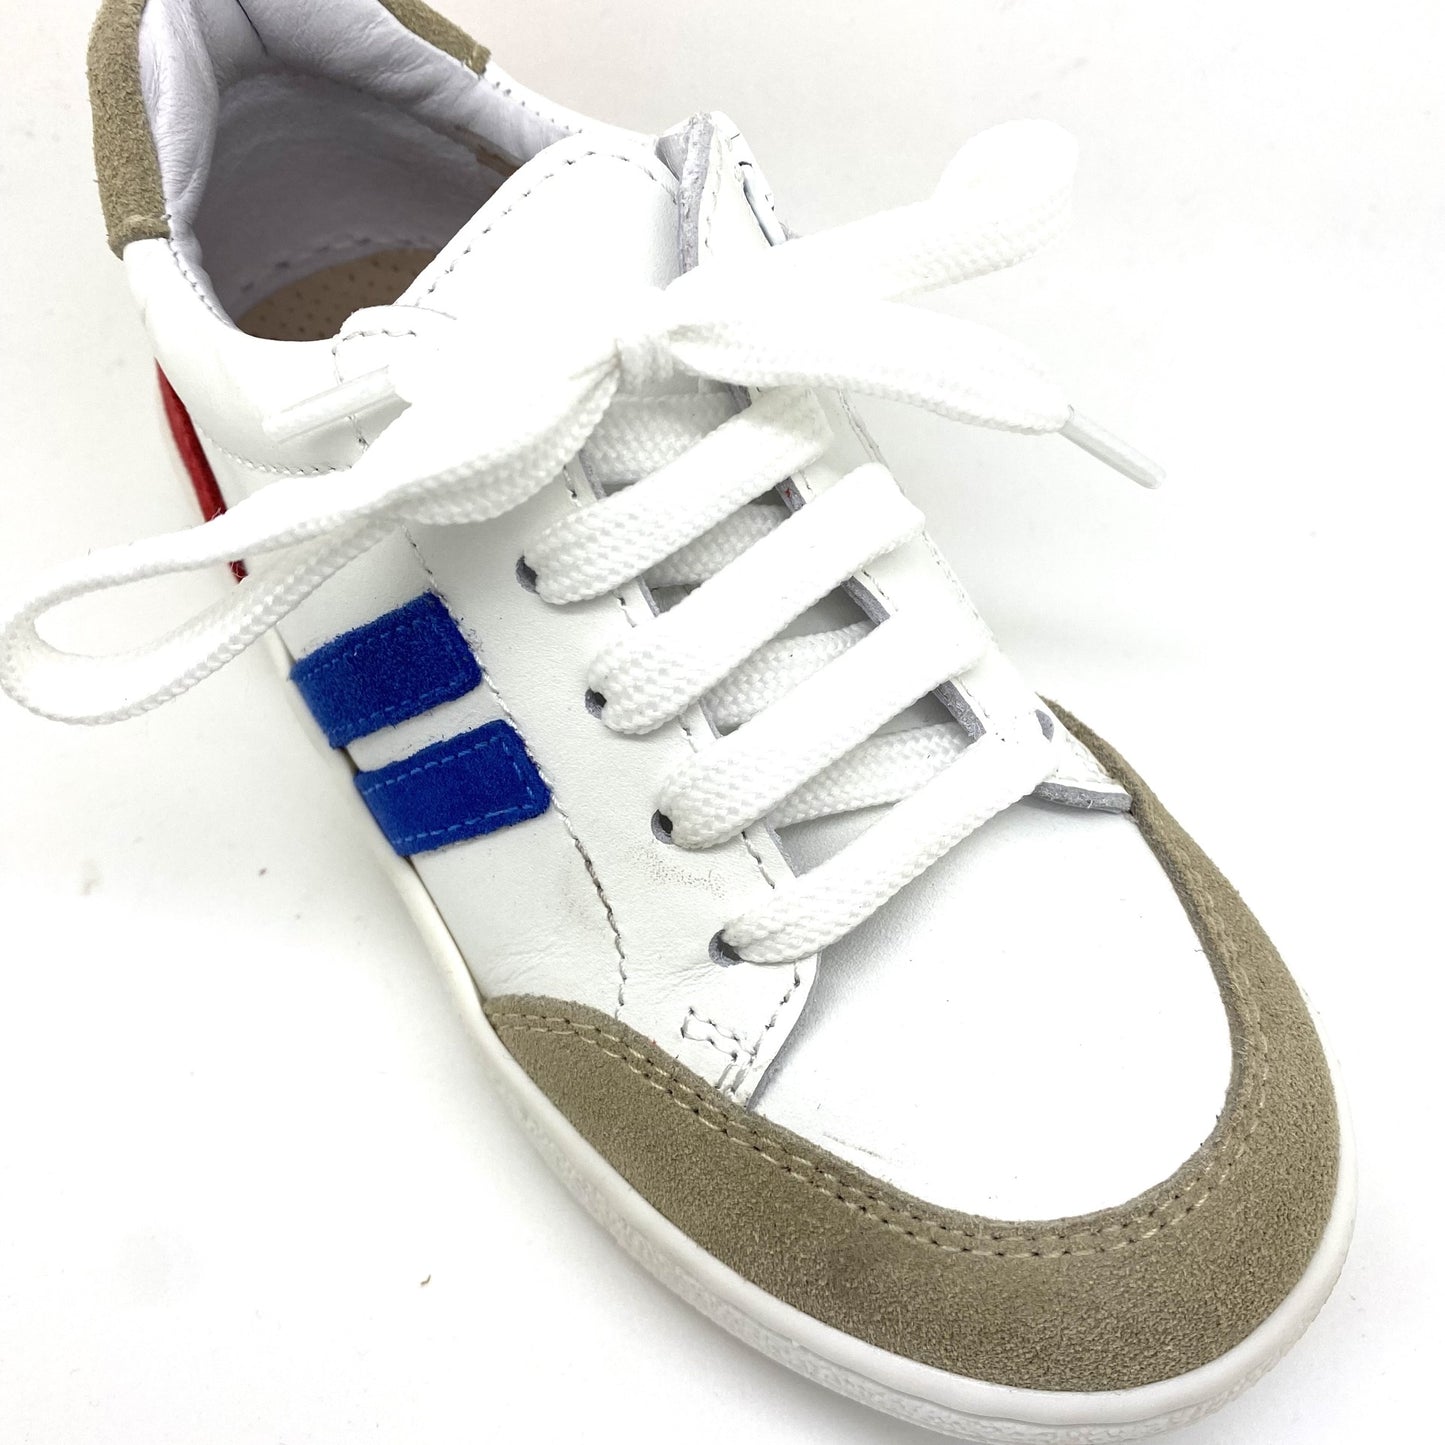 Lunella lage sneaker wit met rood en blauwe accenten.